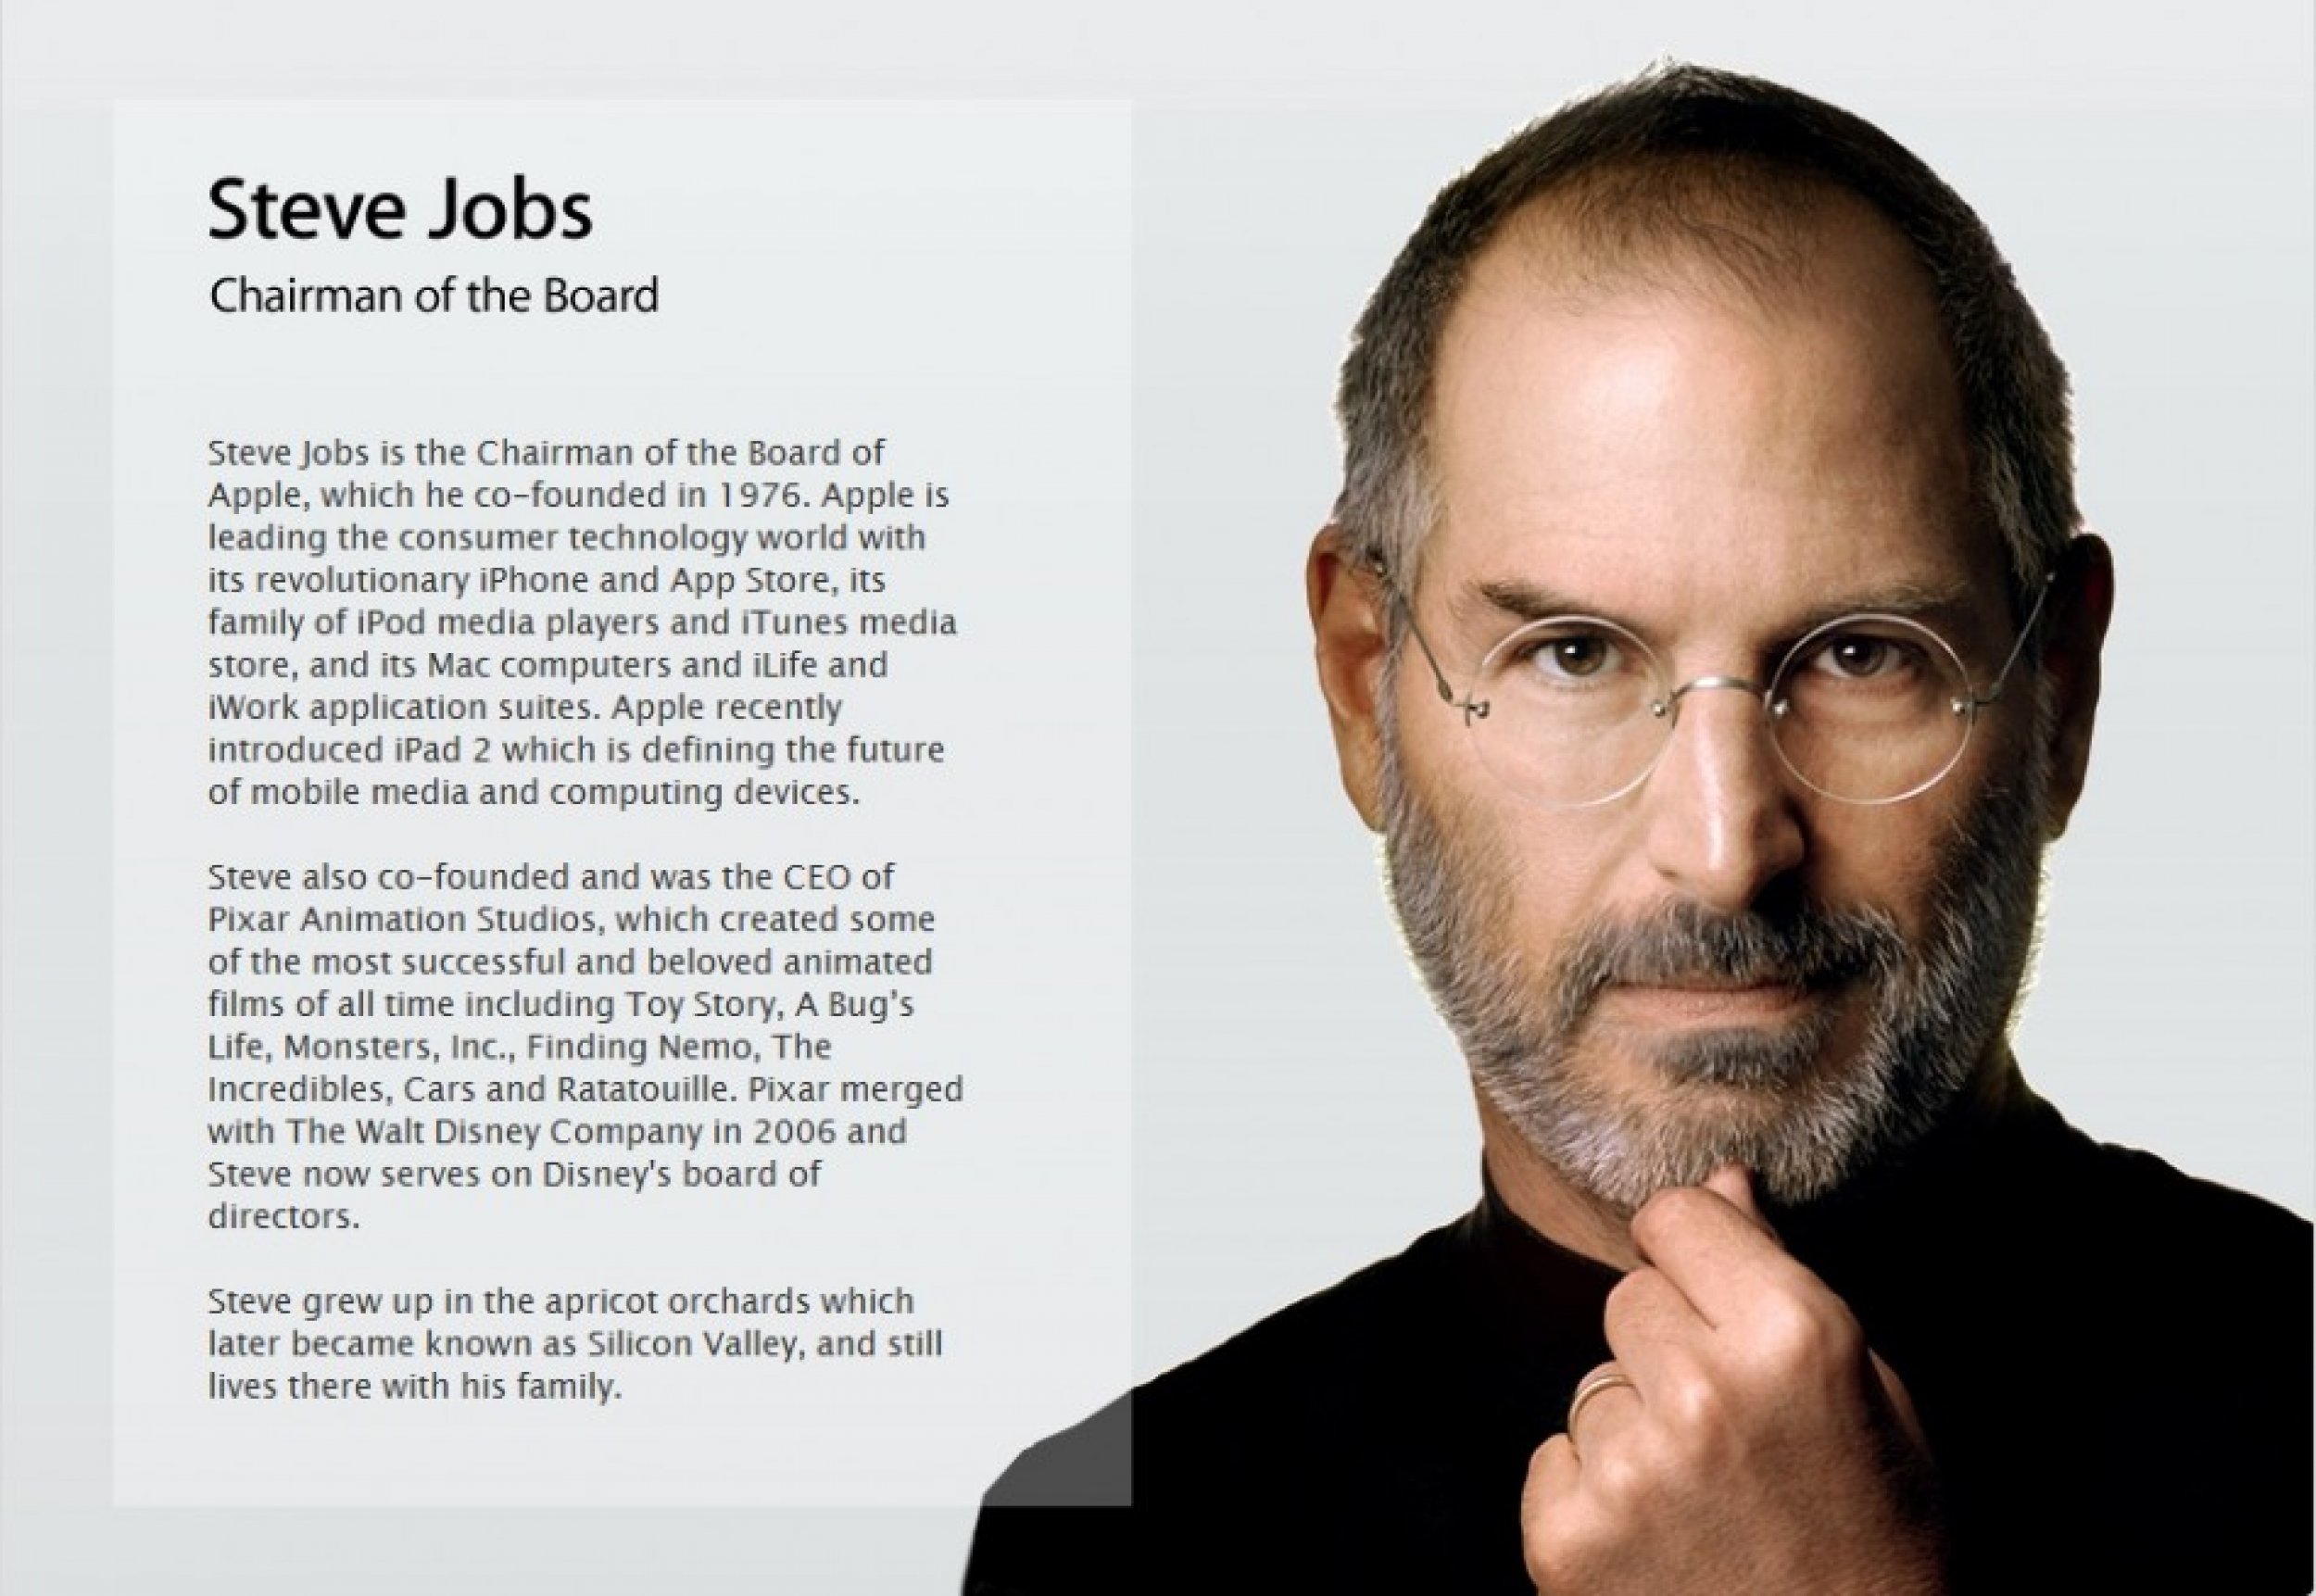 Steve Jobs press biography in Apple site